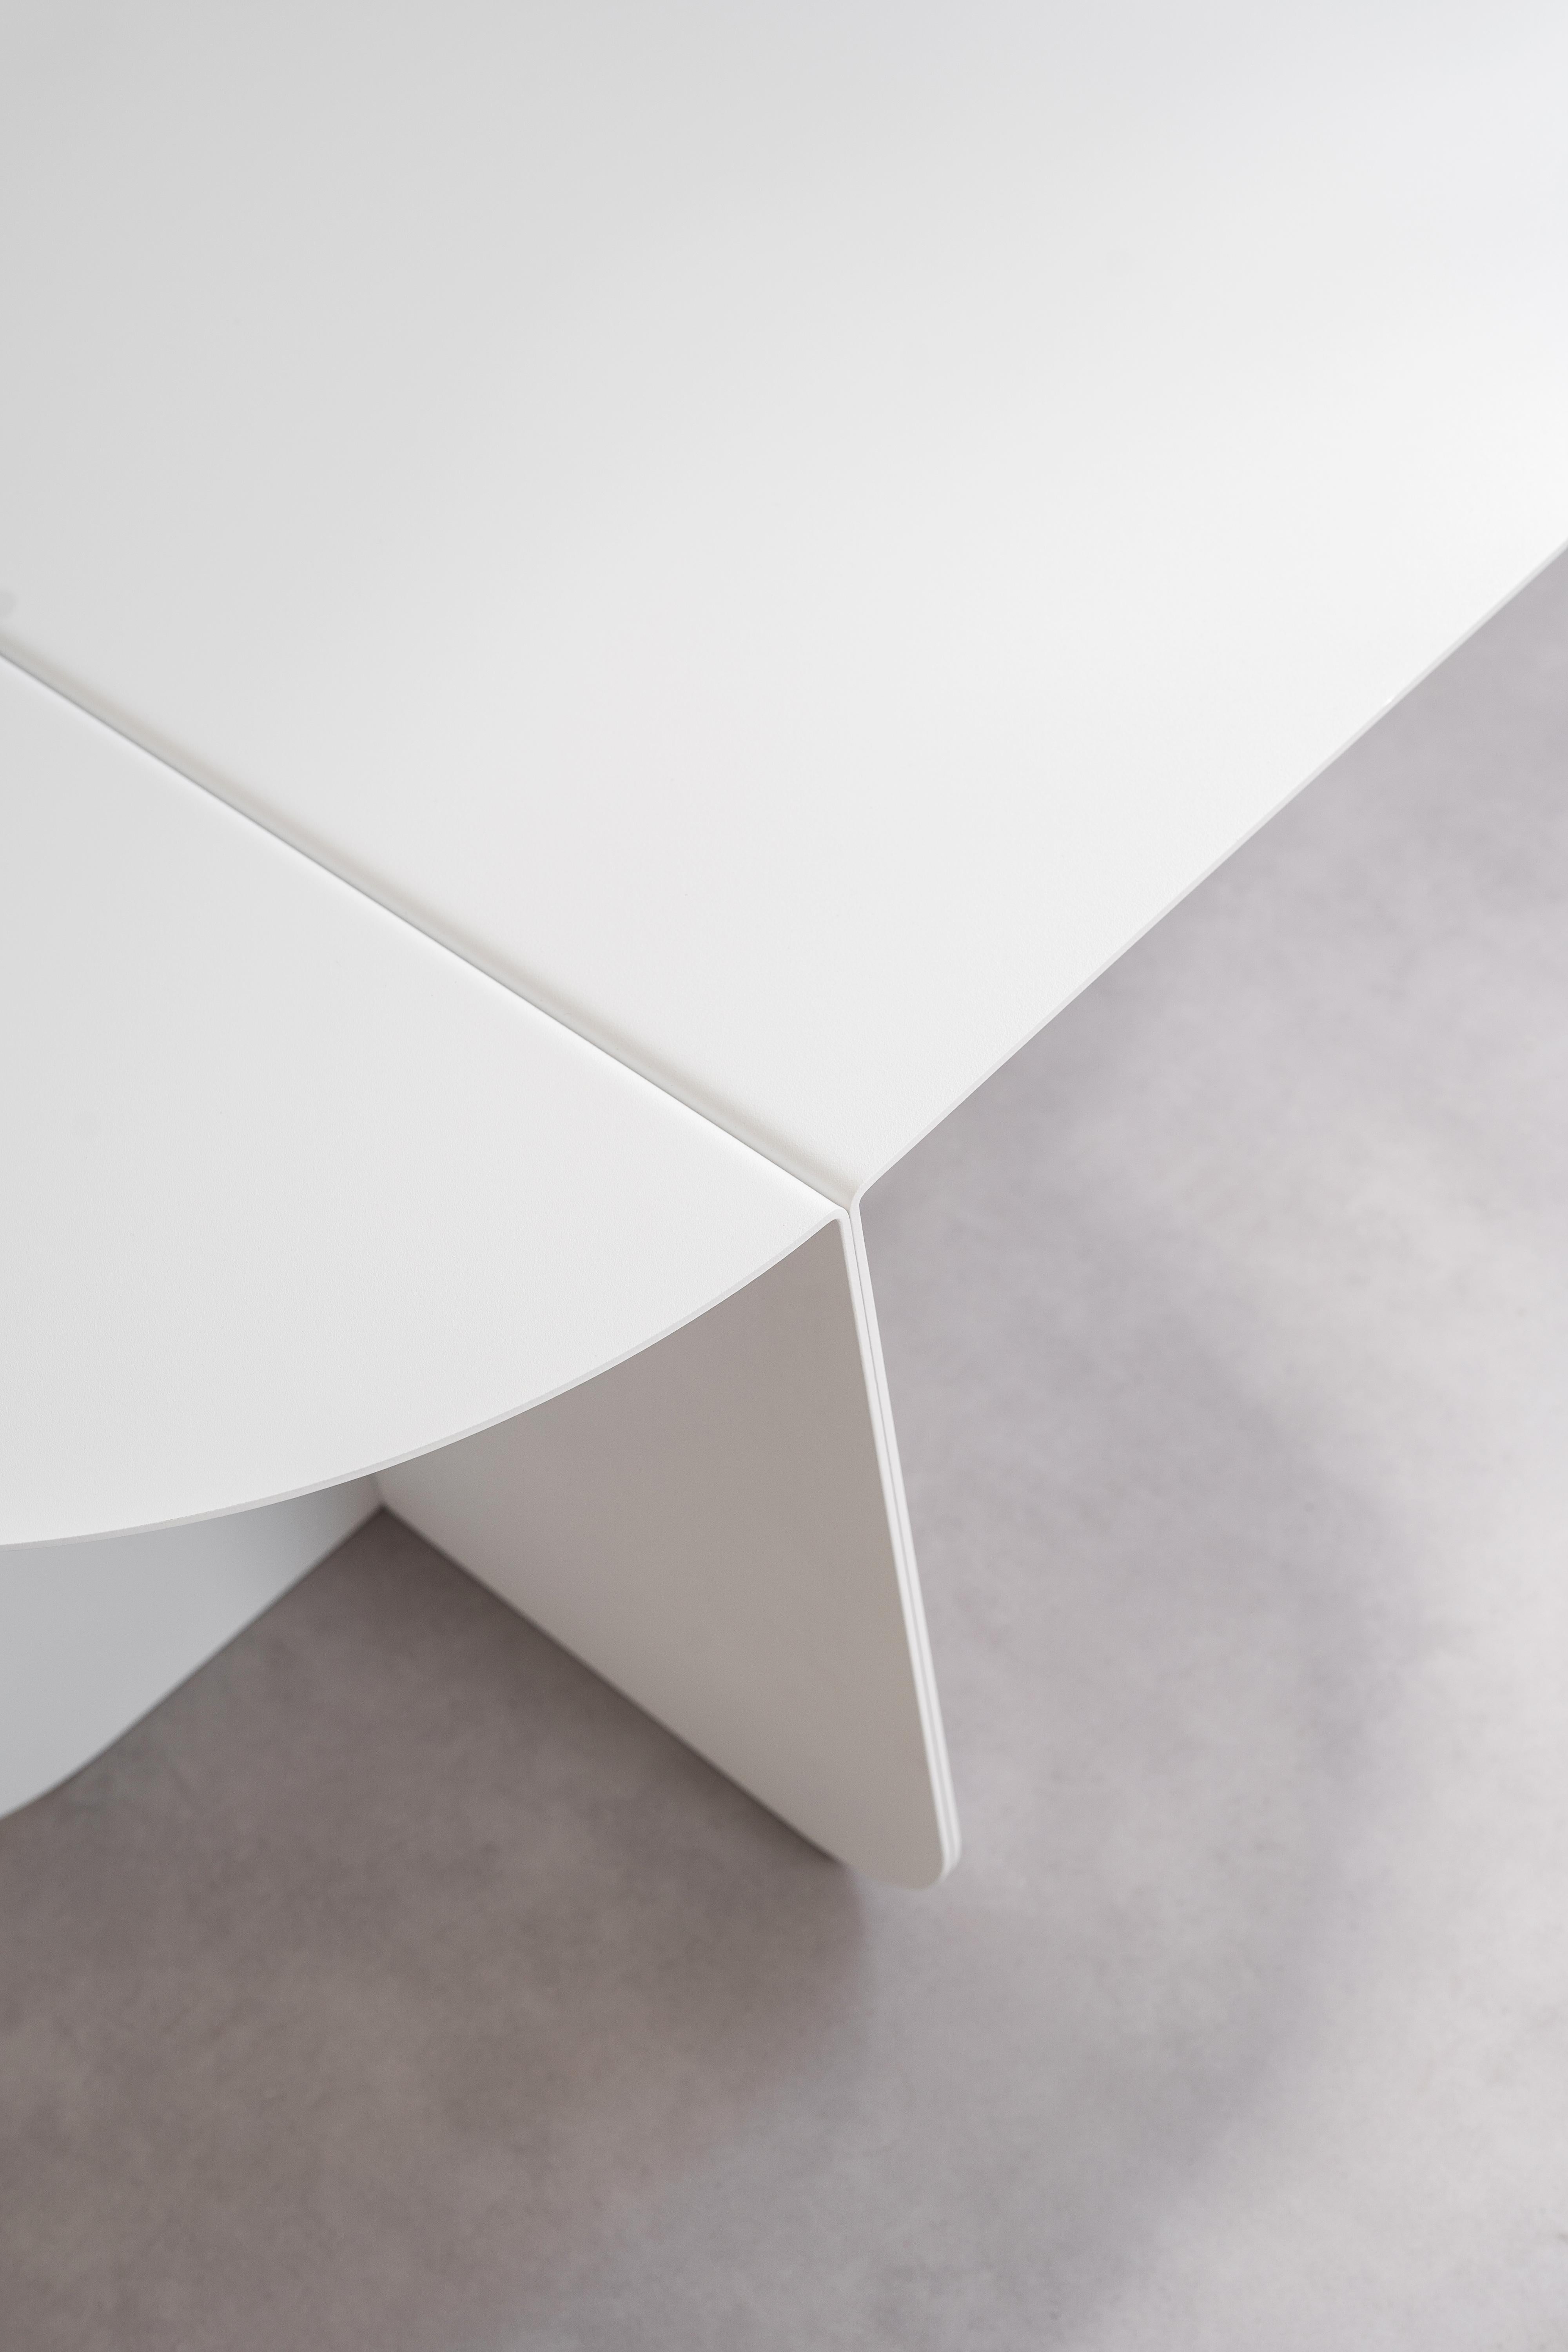 Aluminium Couleur, table basse ovale moderne, Ral 1001 - Beige, par Bas Vellekoop en vente